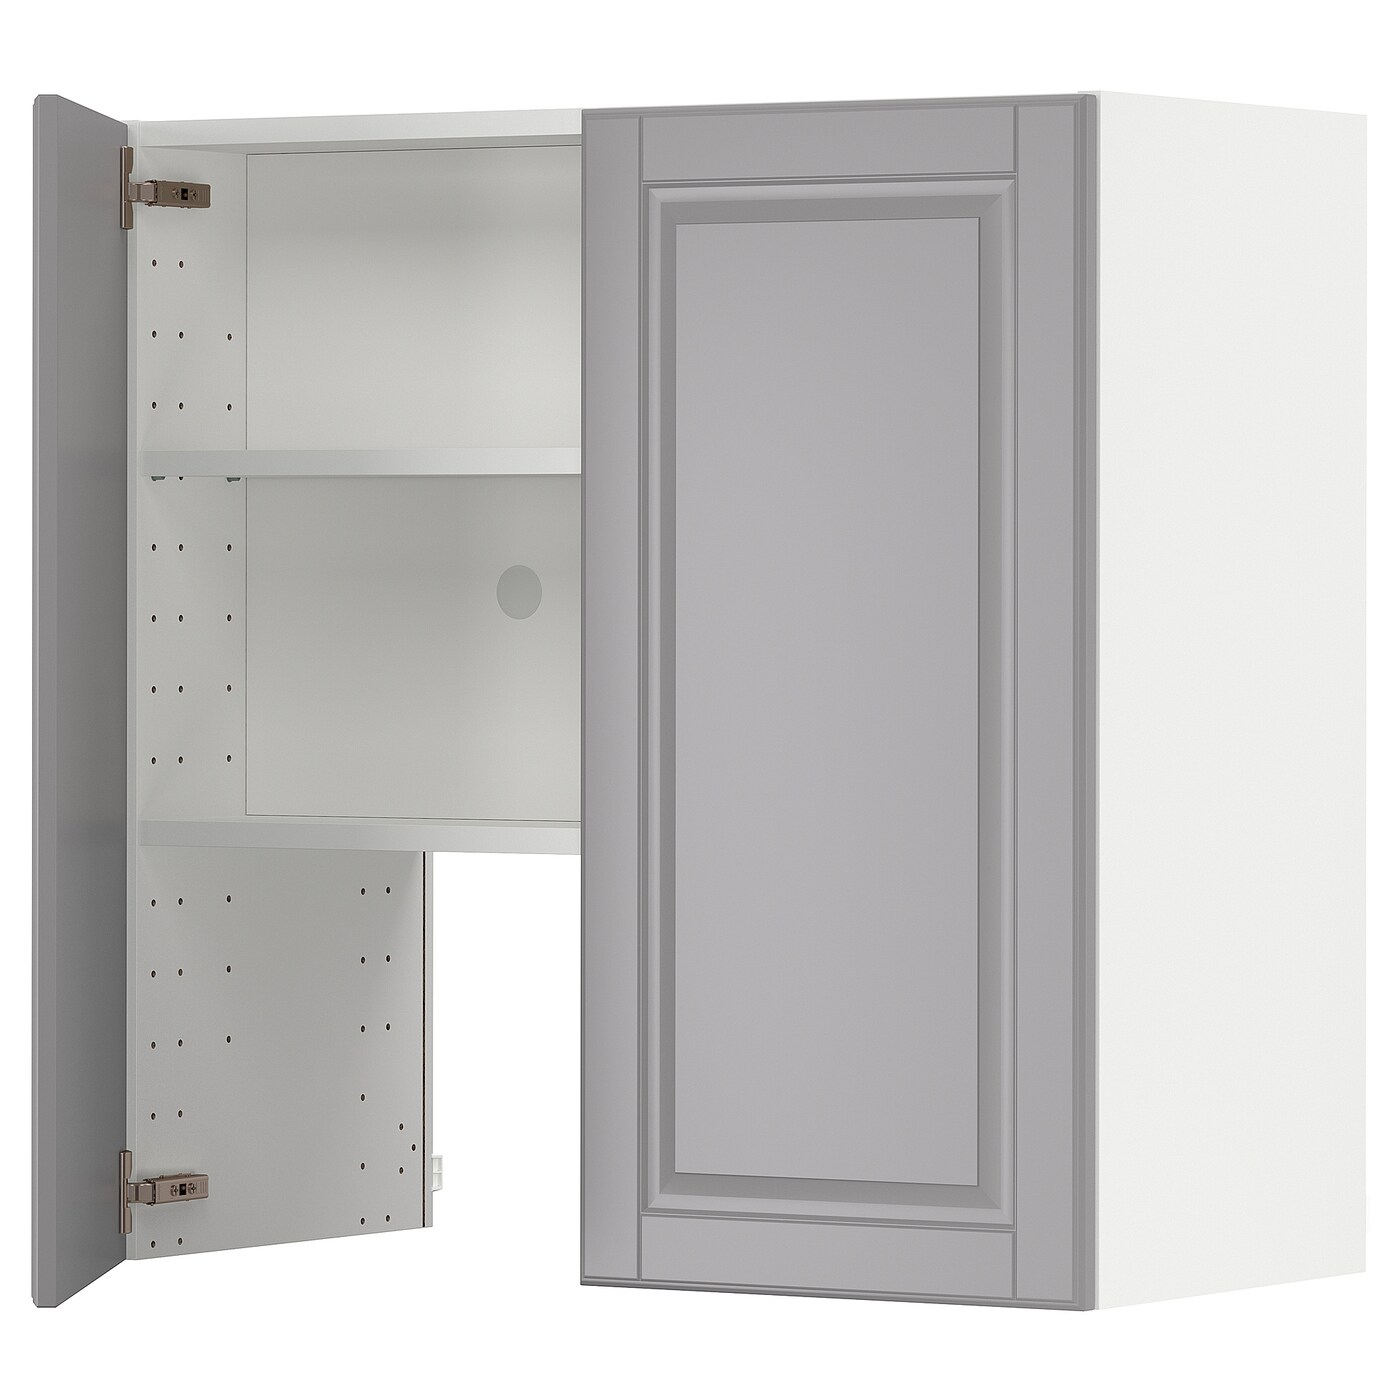 Навесной шкаф - METOD IKEA/ МЕТОД ИКЕА, 80х80 см, белый/серый